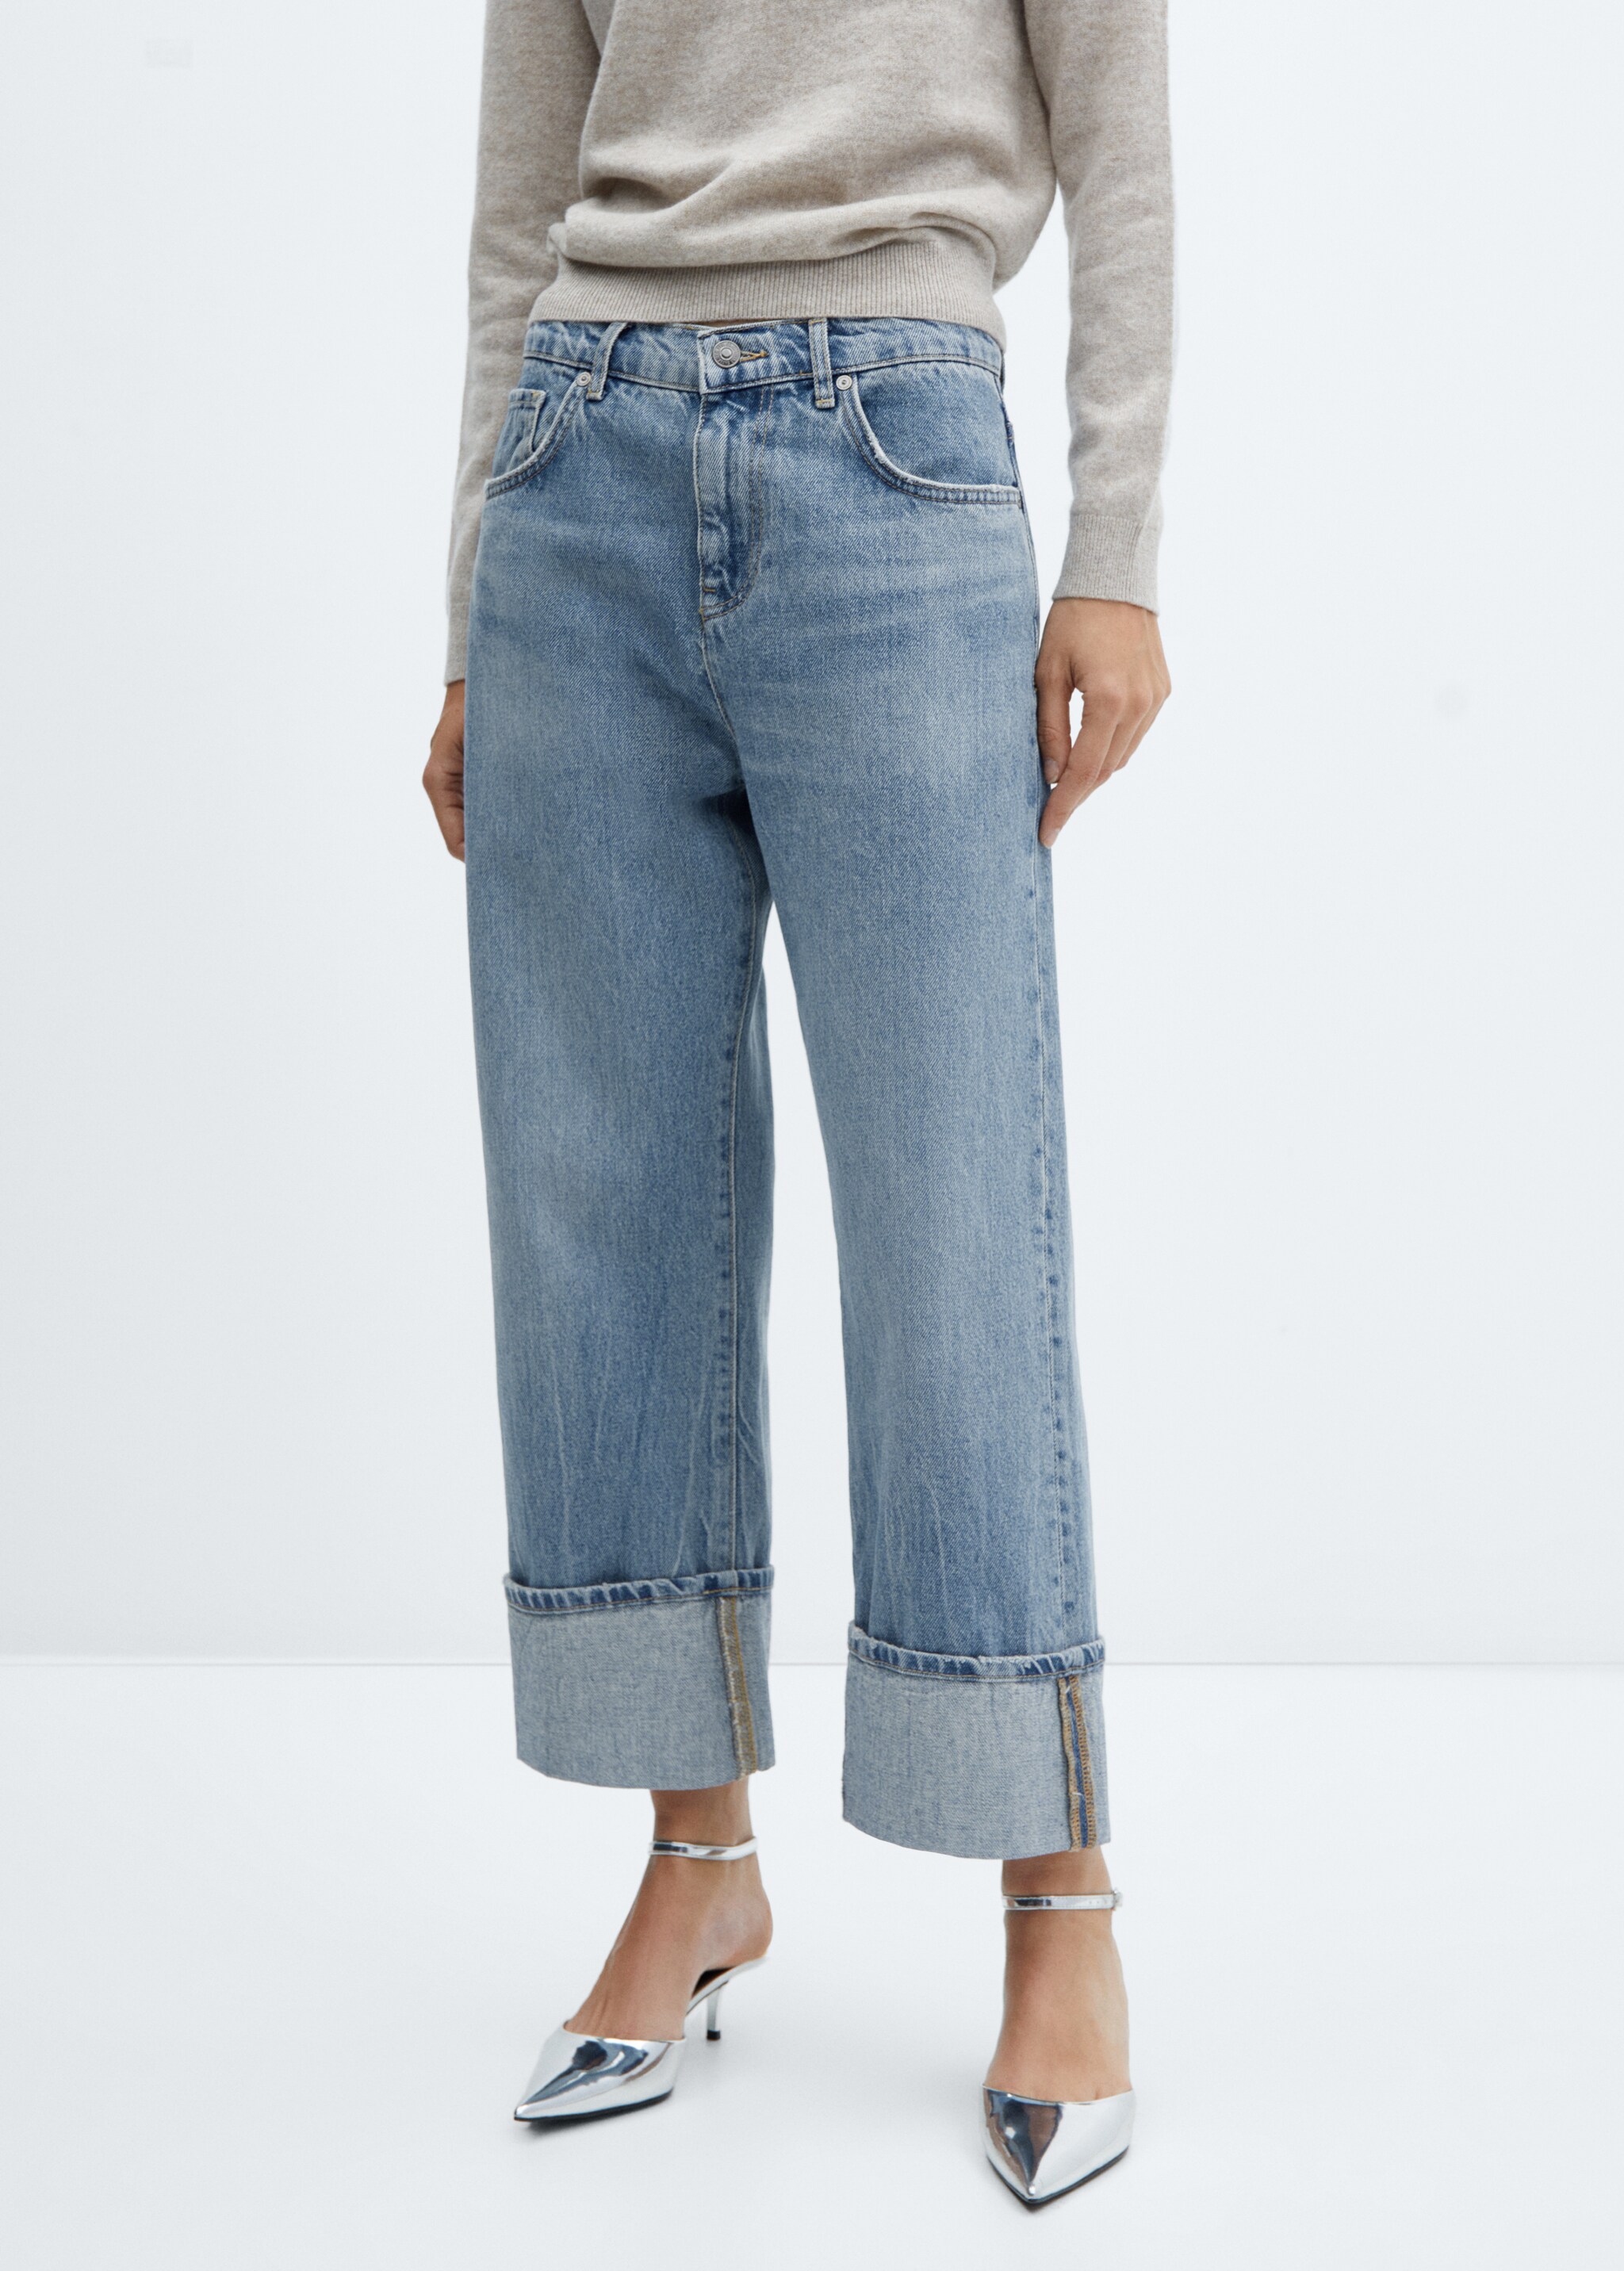 Jeans wideleg bajo vuelto - Plano medio